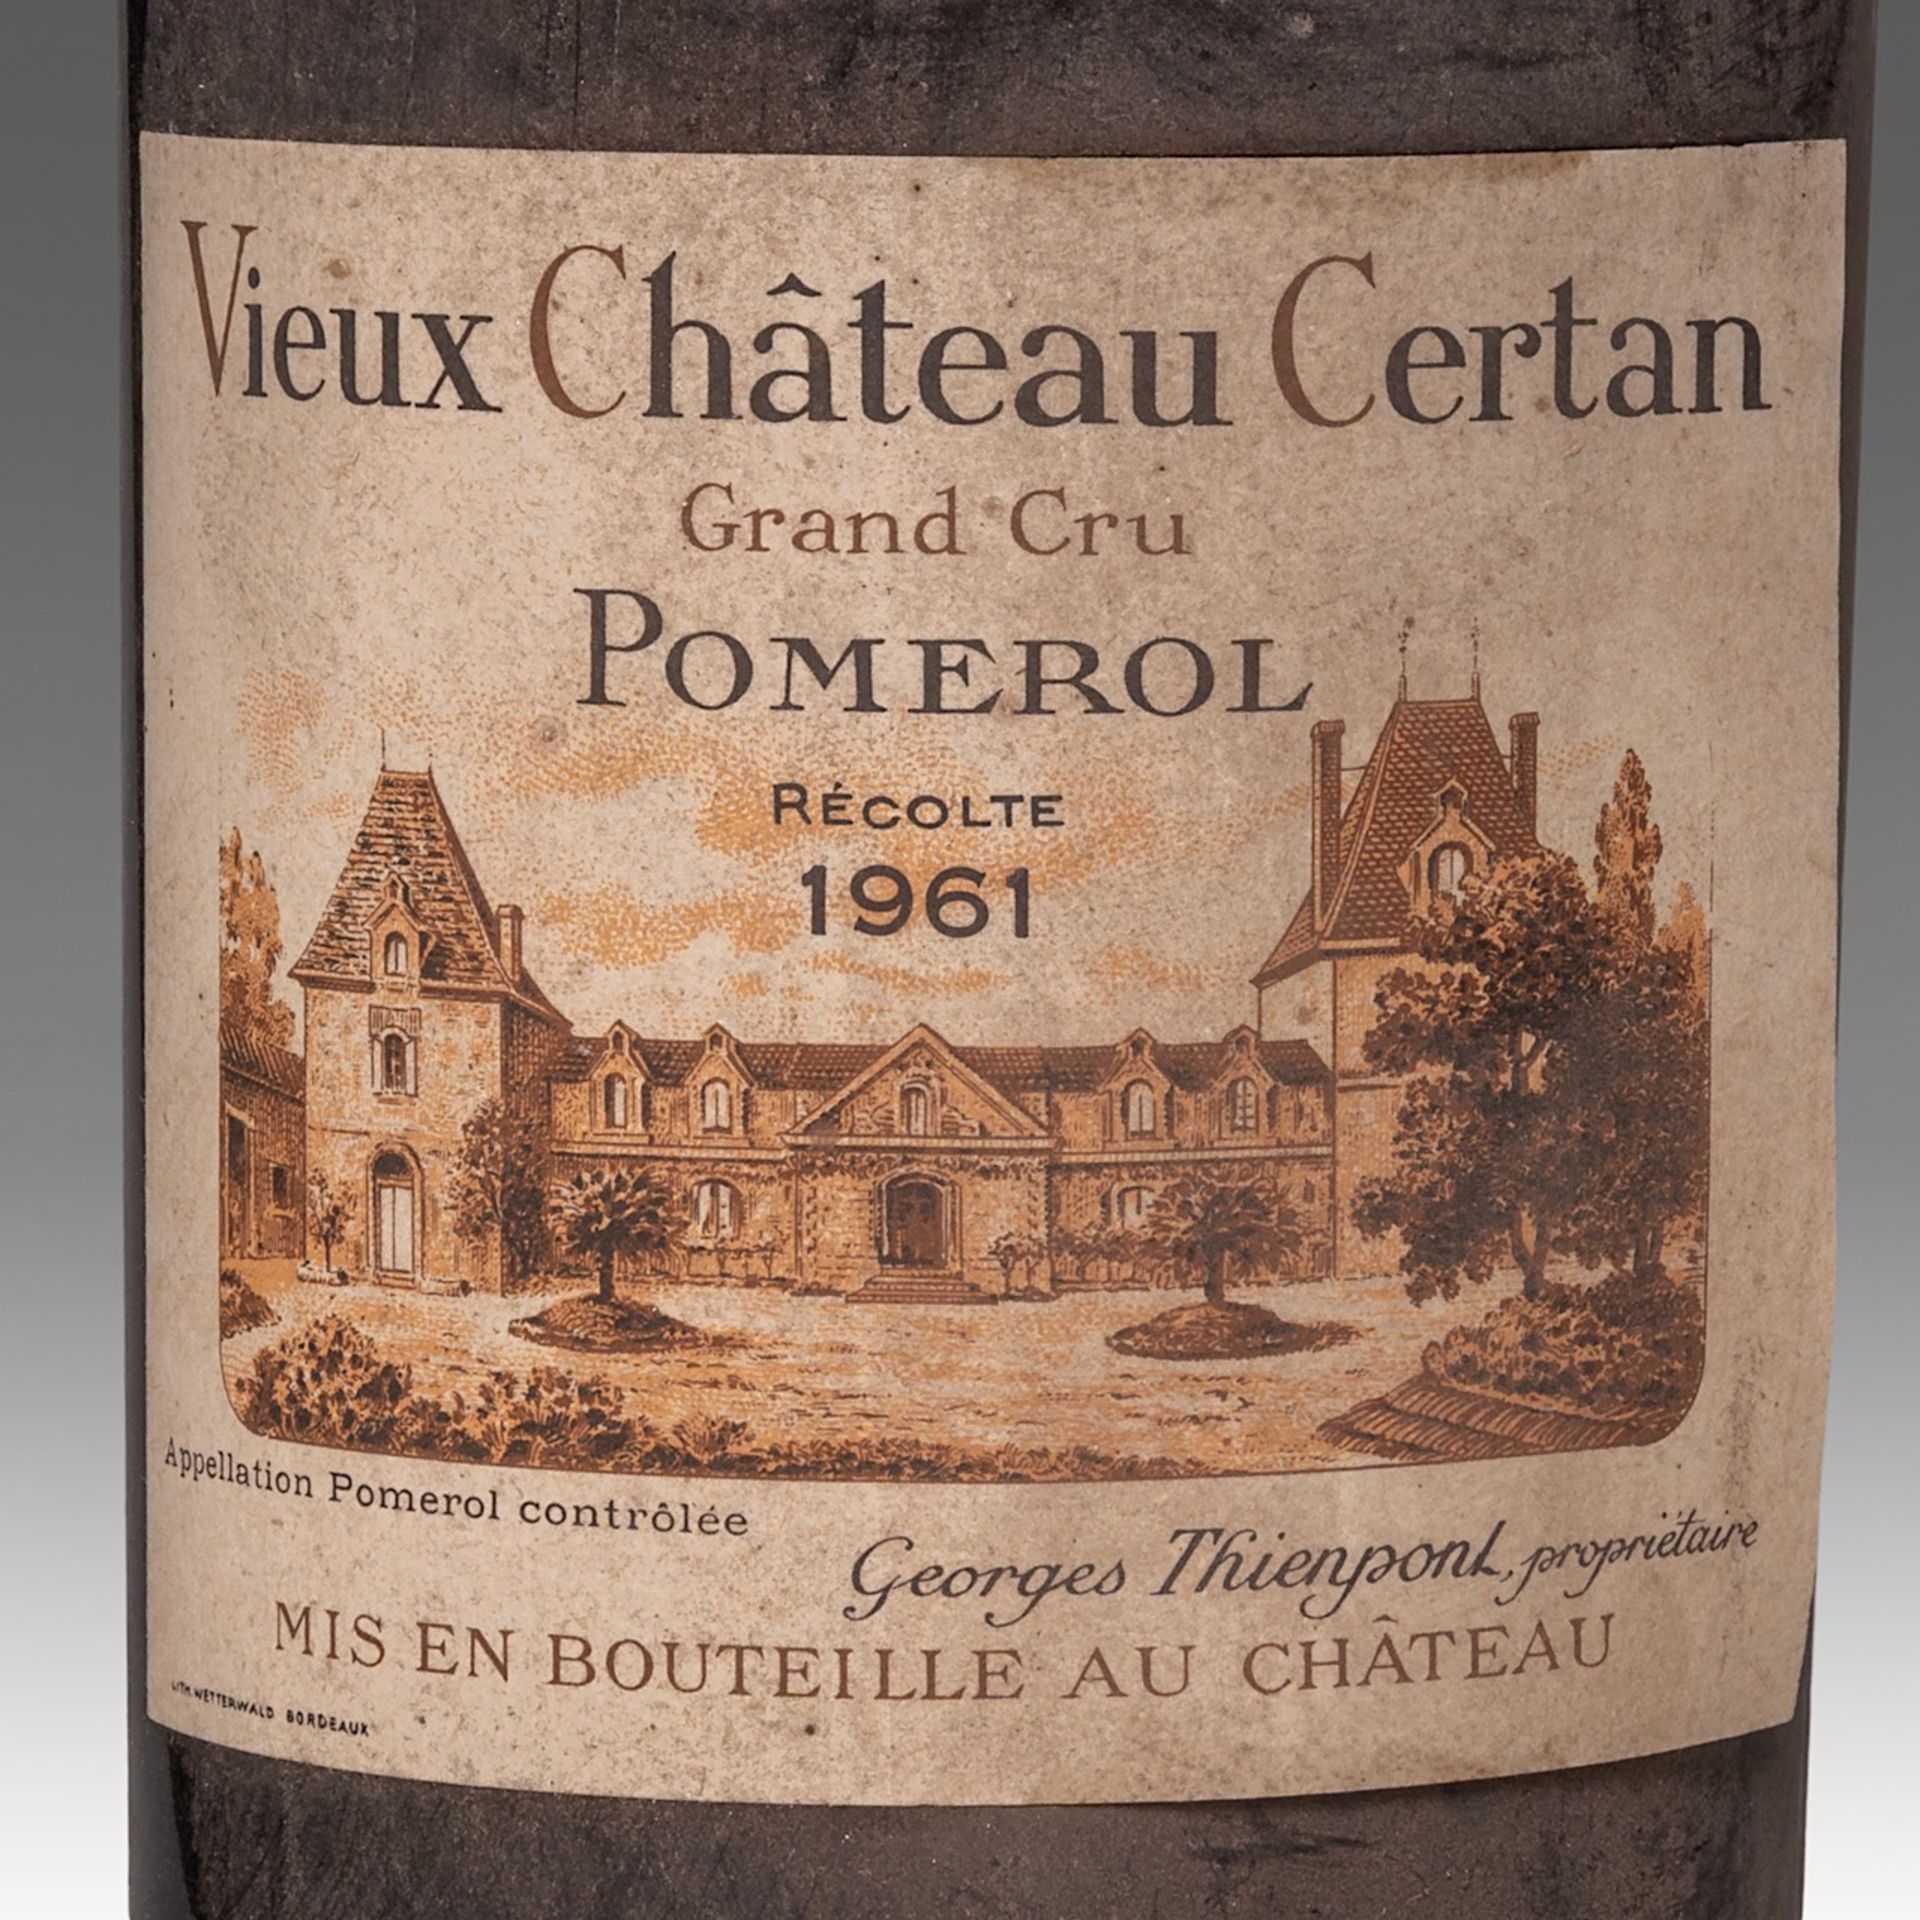 A magnum bottle Vieux Chateau Certan, Grand Cru, Pomerol, 1961, 150 CL - Bild 2 aus 4